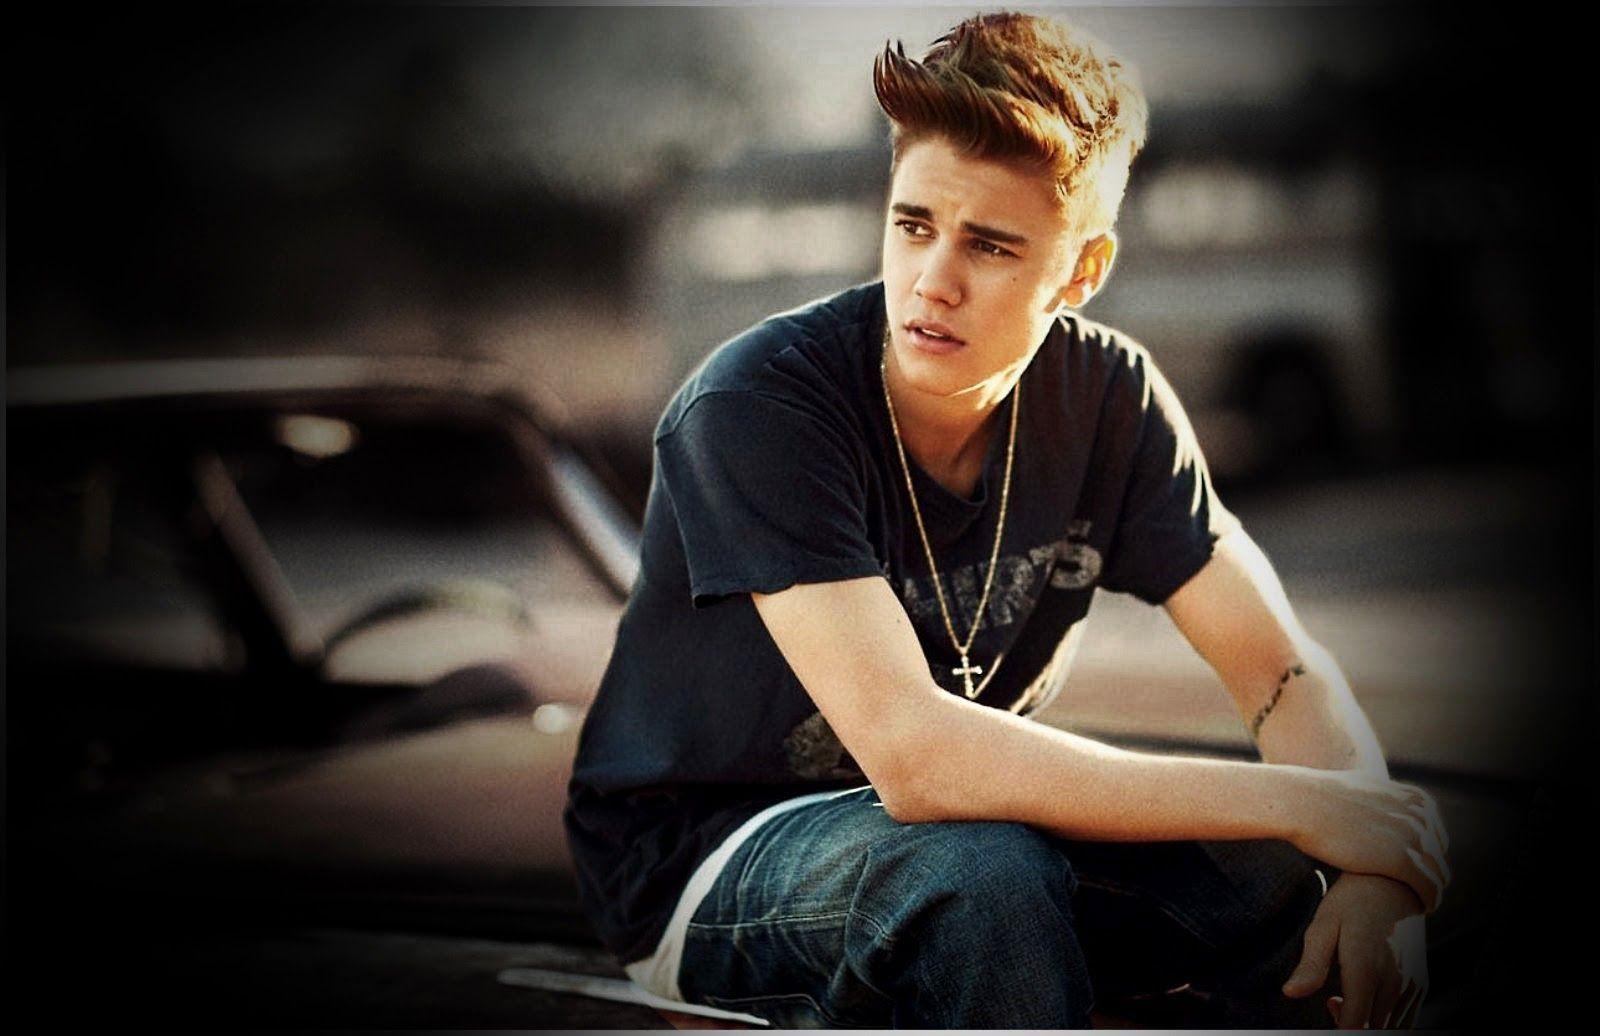 Justin Bieber Wallpaper. Download Free High Definition Desktop